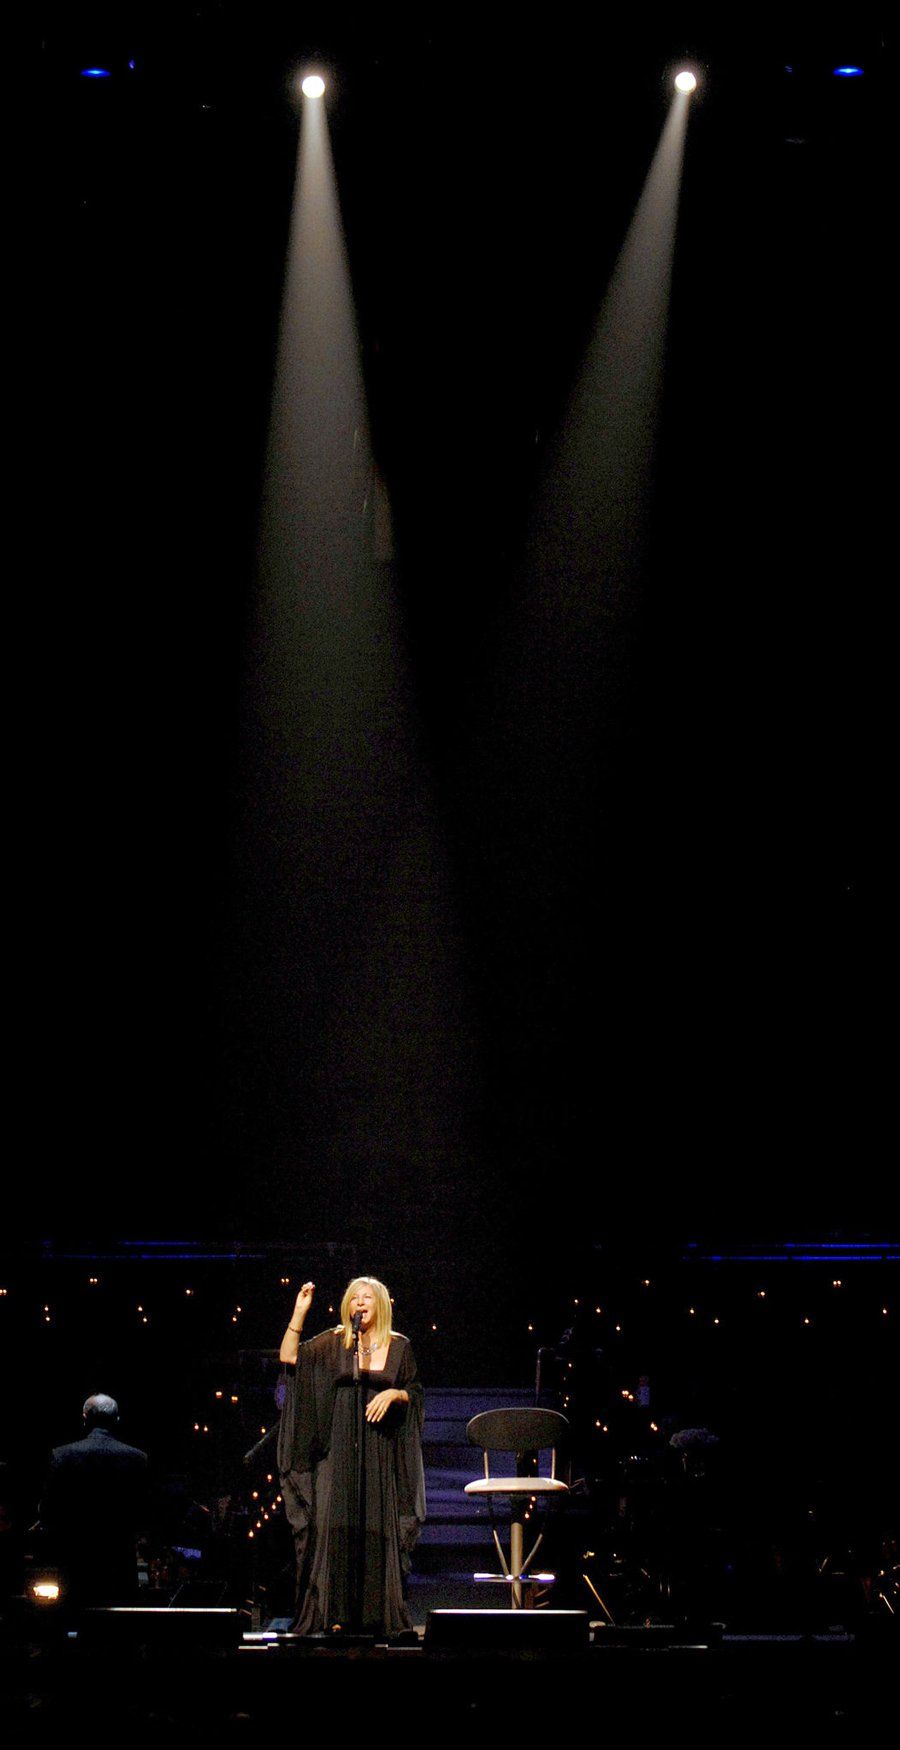 Streisand under the spotlight in concert in Manchester, England, 2007.